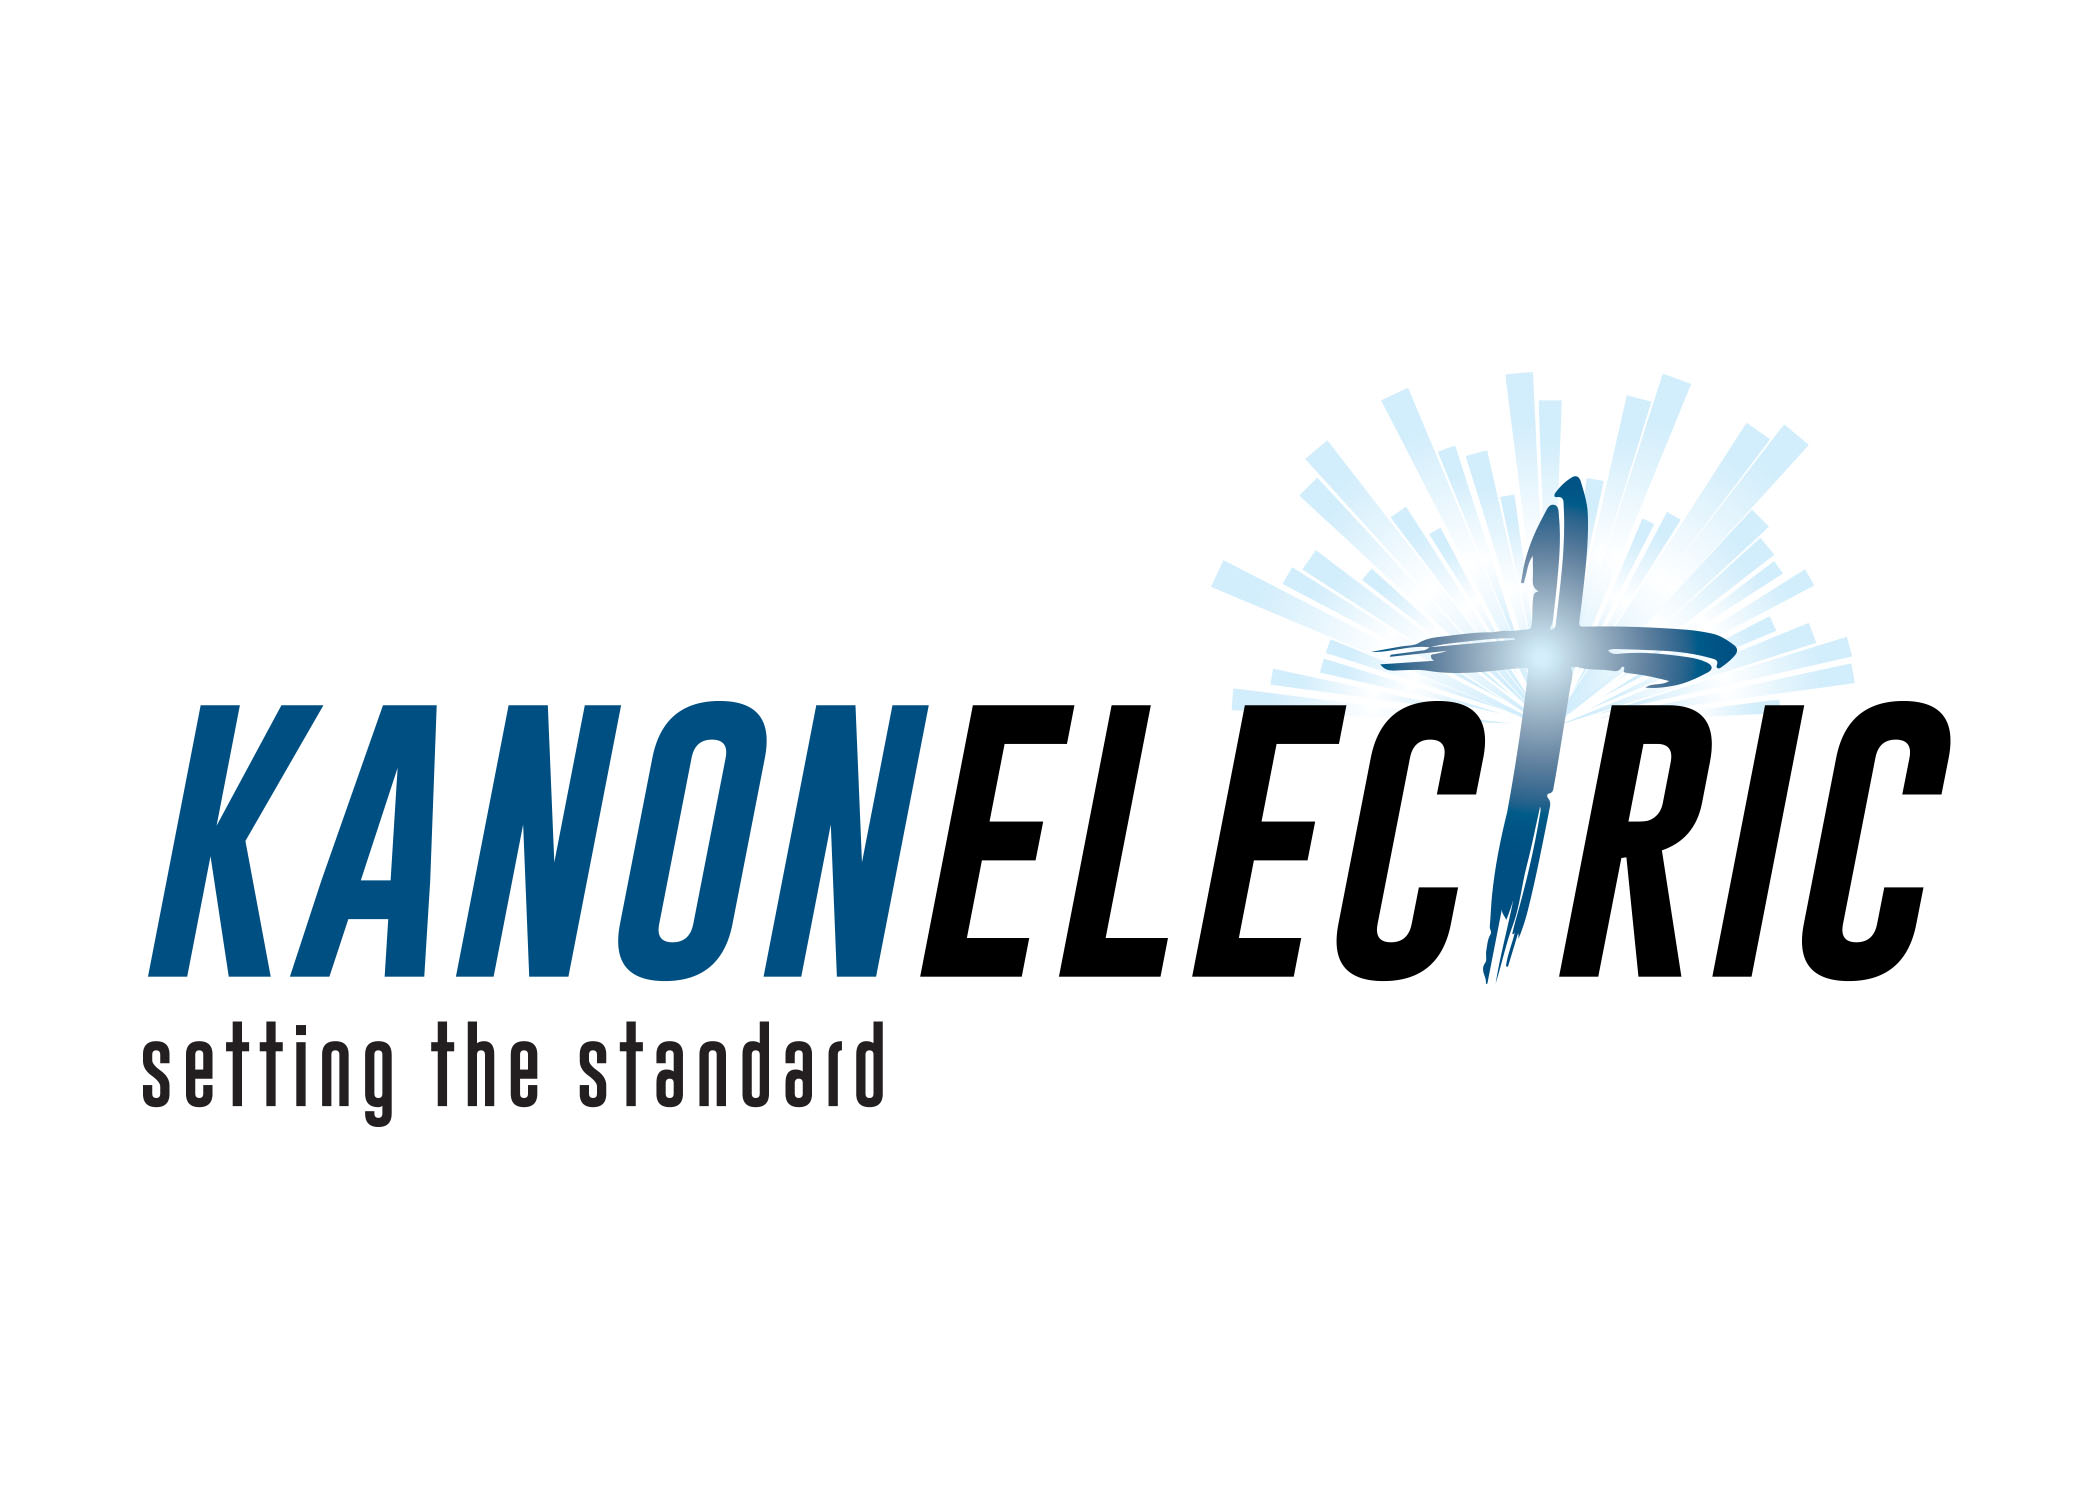 Cross Logo_Horizontal_Kanon Electric